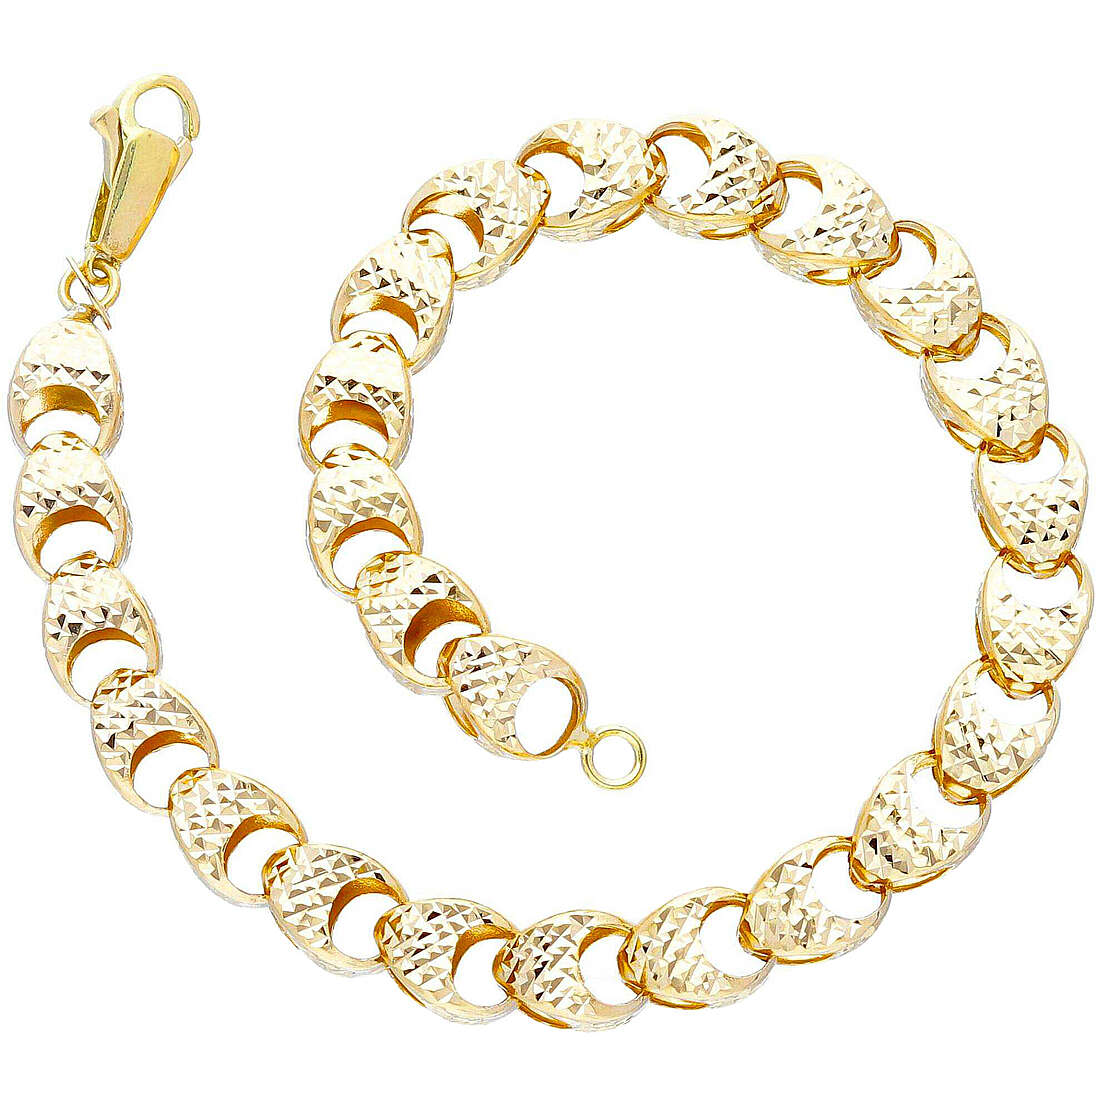 bracelet woman Chain 18 kt Gold jewel GioiaPura Oro 750 GP-S241463